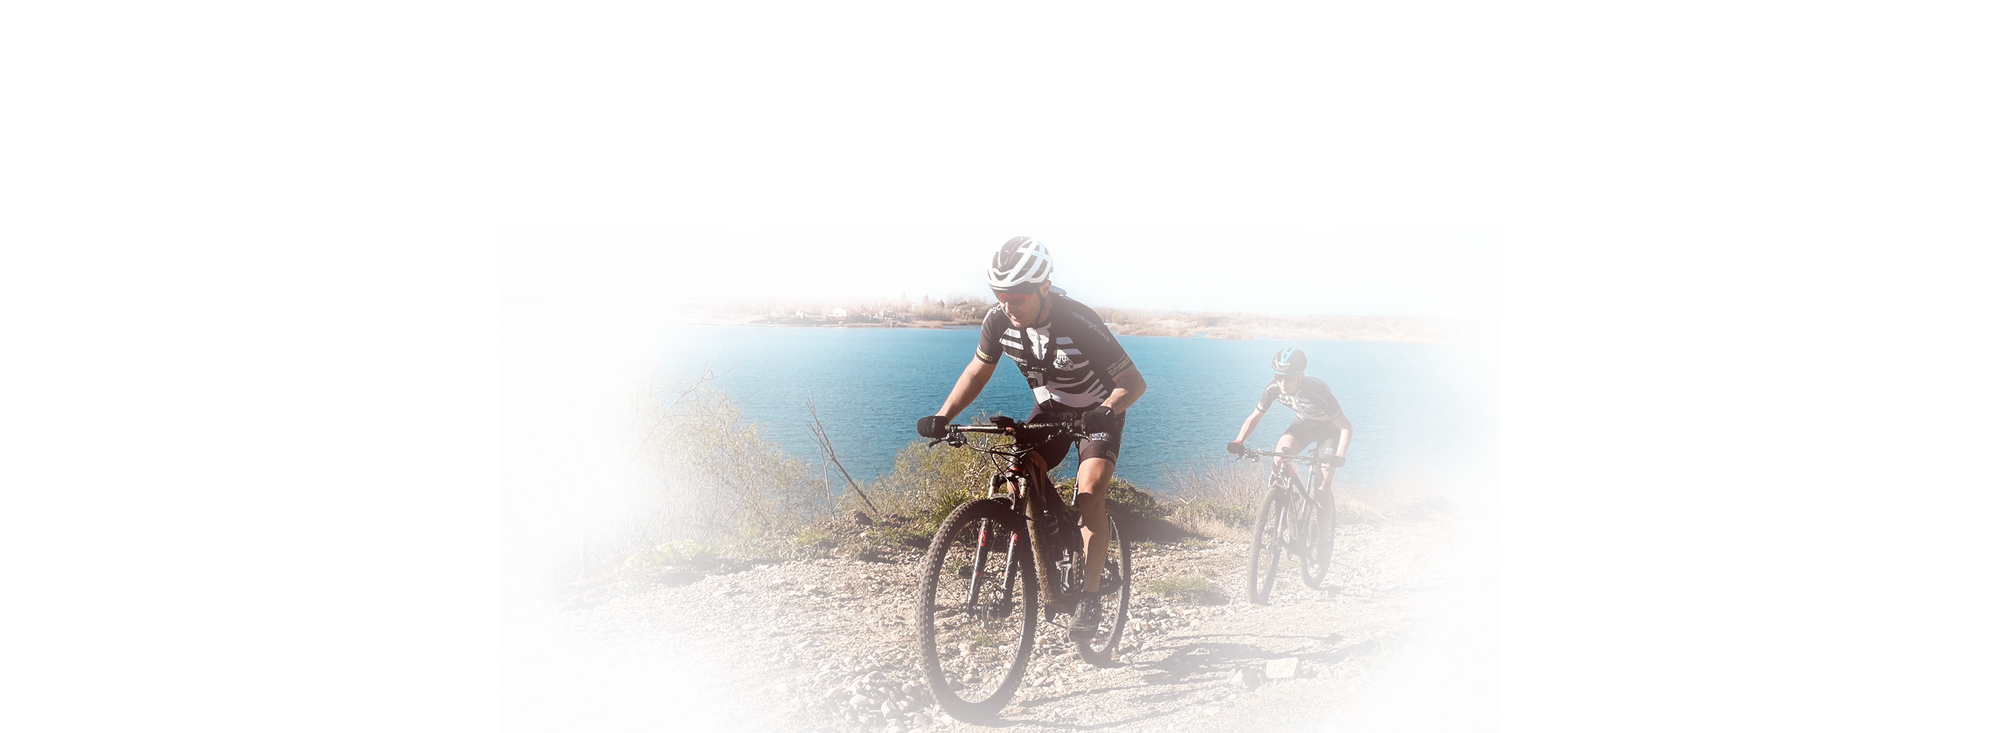 Bike 'n Fun Race - aventura, muzica funky si relaxare pe plaja lacului din Ghioroc